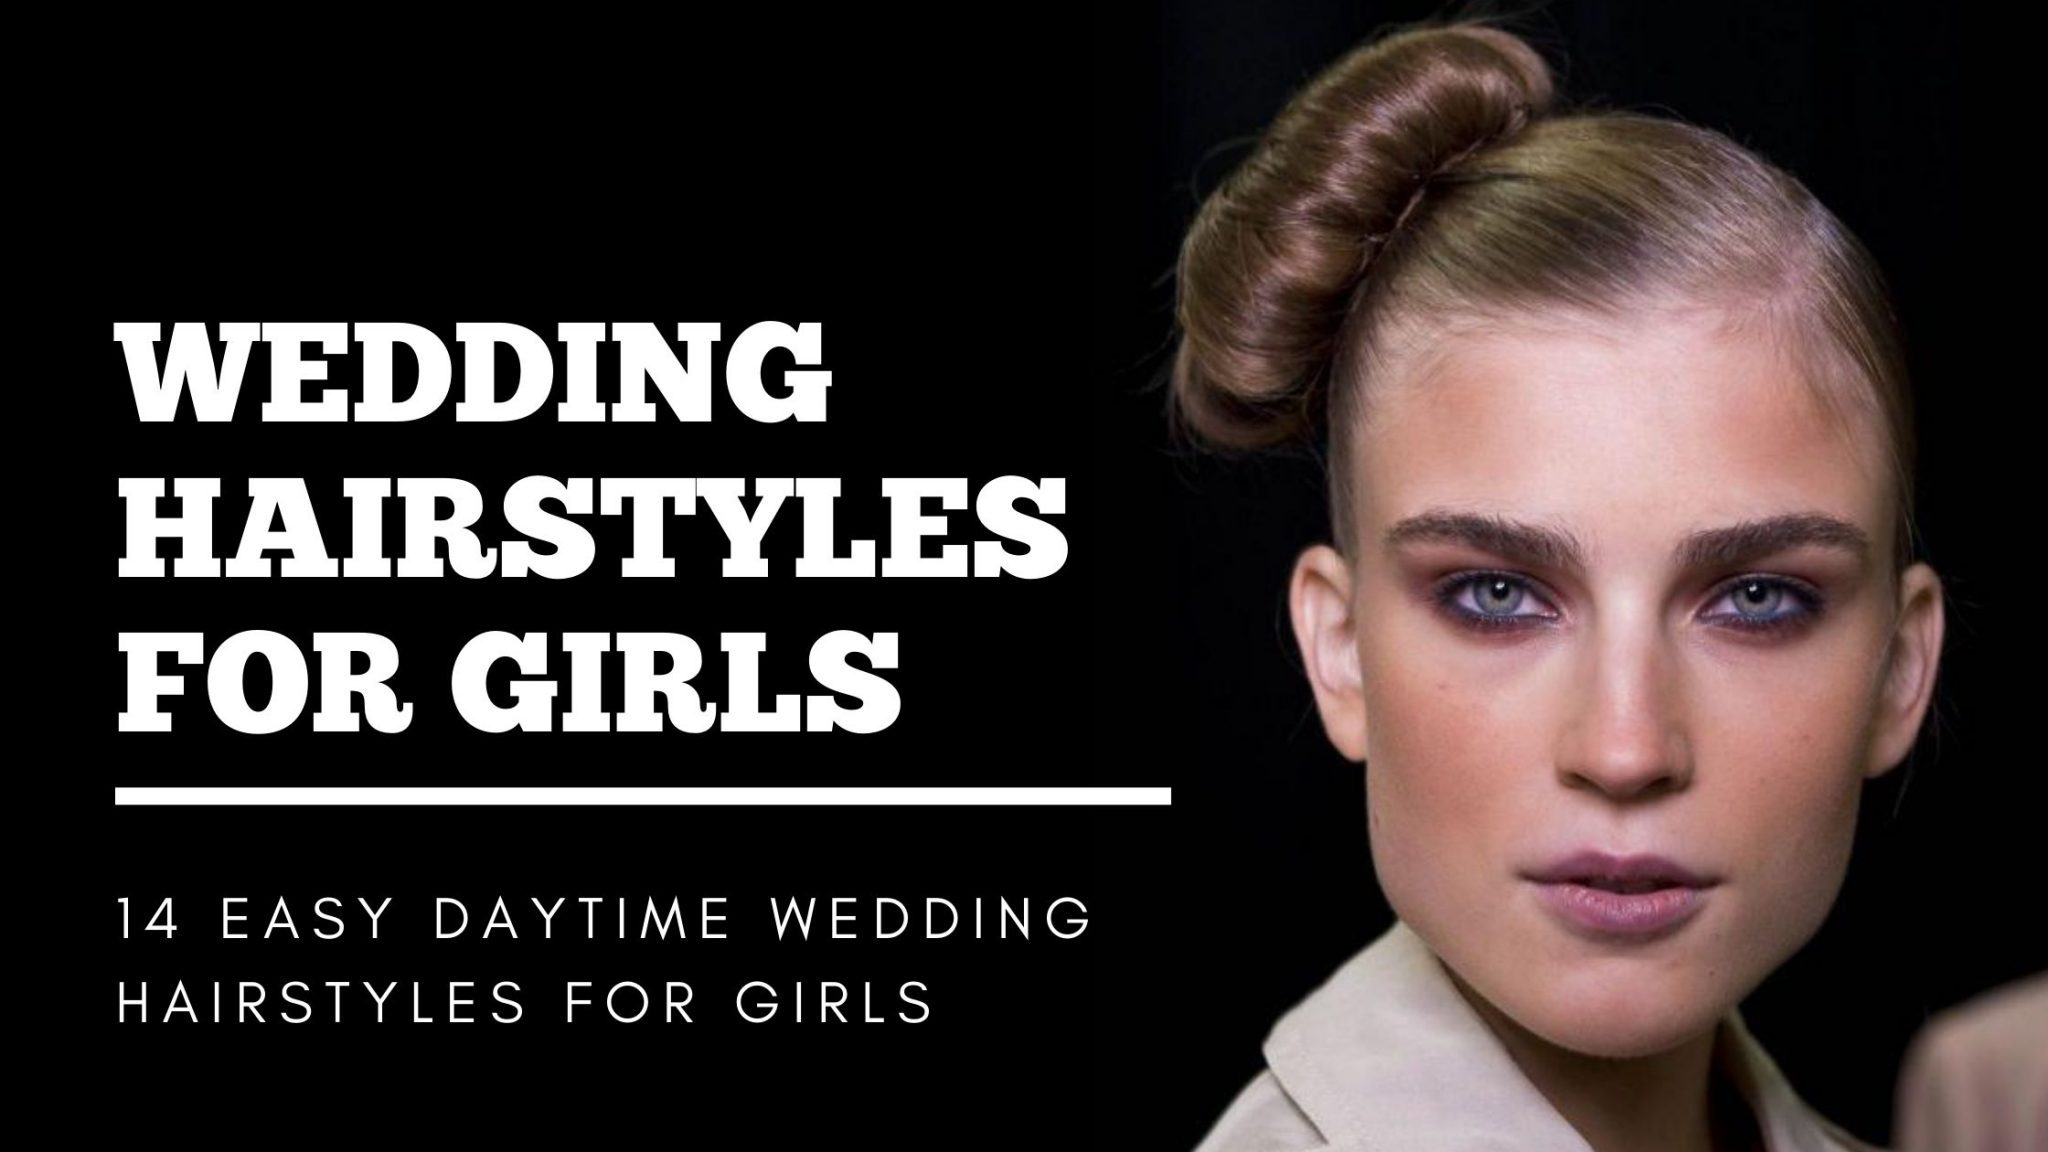 14 EASY DAYTIME WEDDING HAIRSTYLES FOR GIRLS